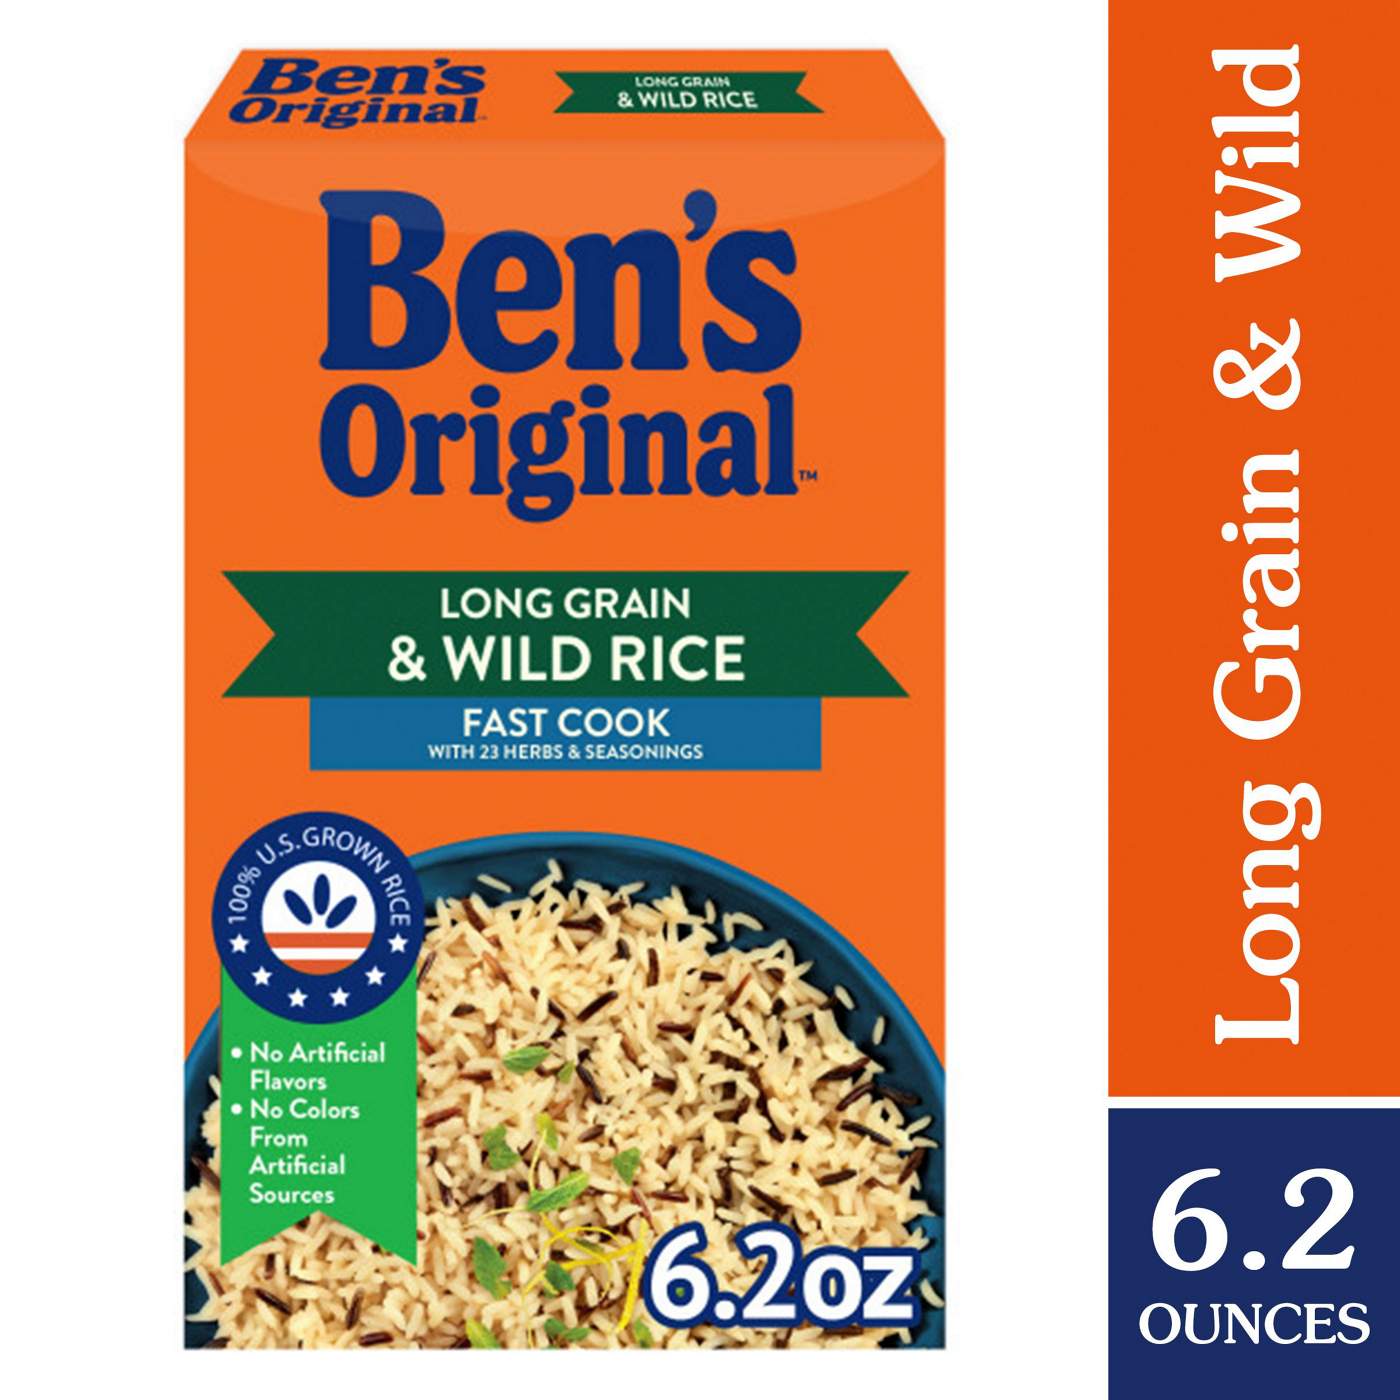 Ben's Original Fast Cook Long Grain and Wild Rice; image 2 of 6